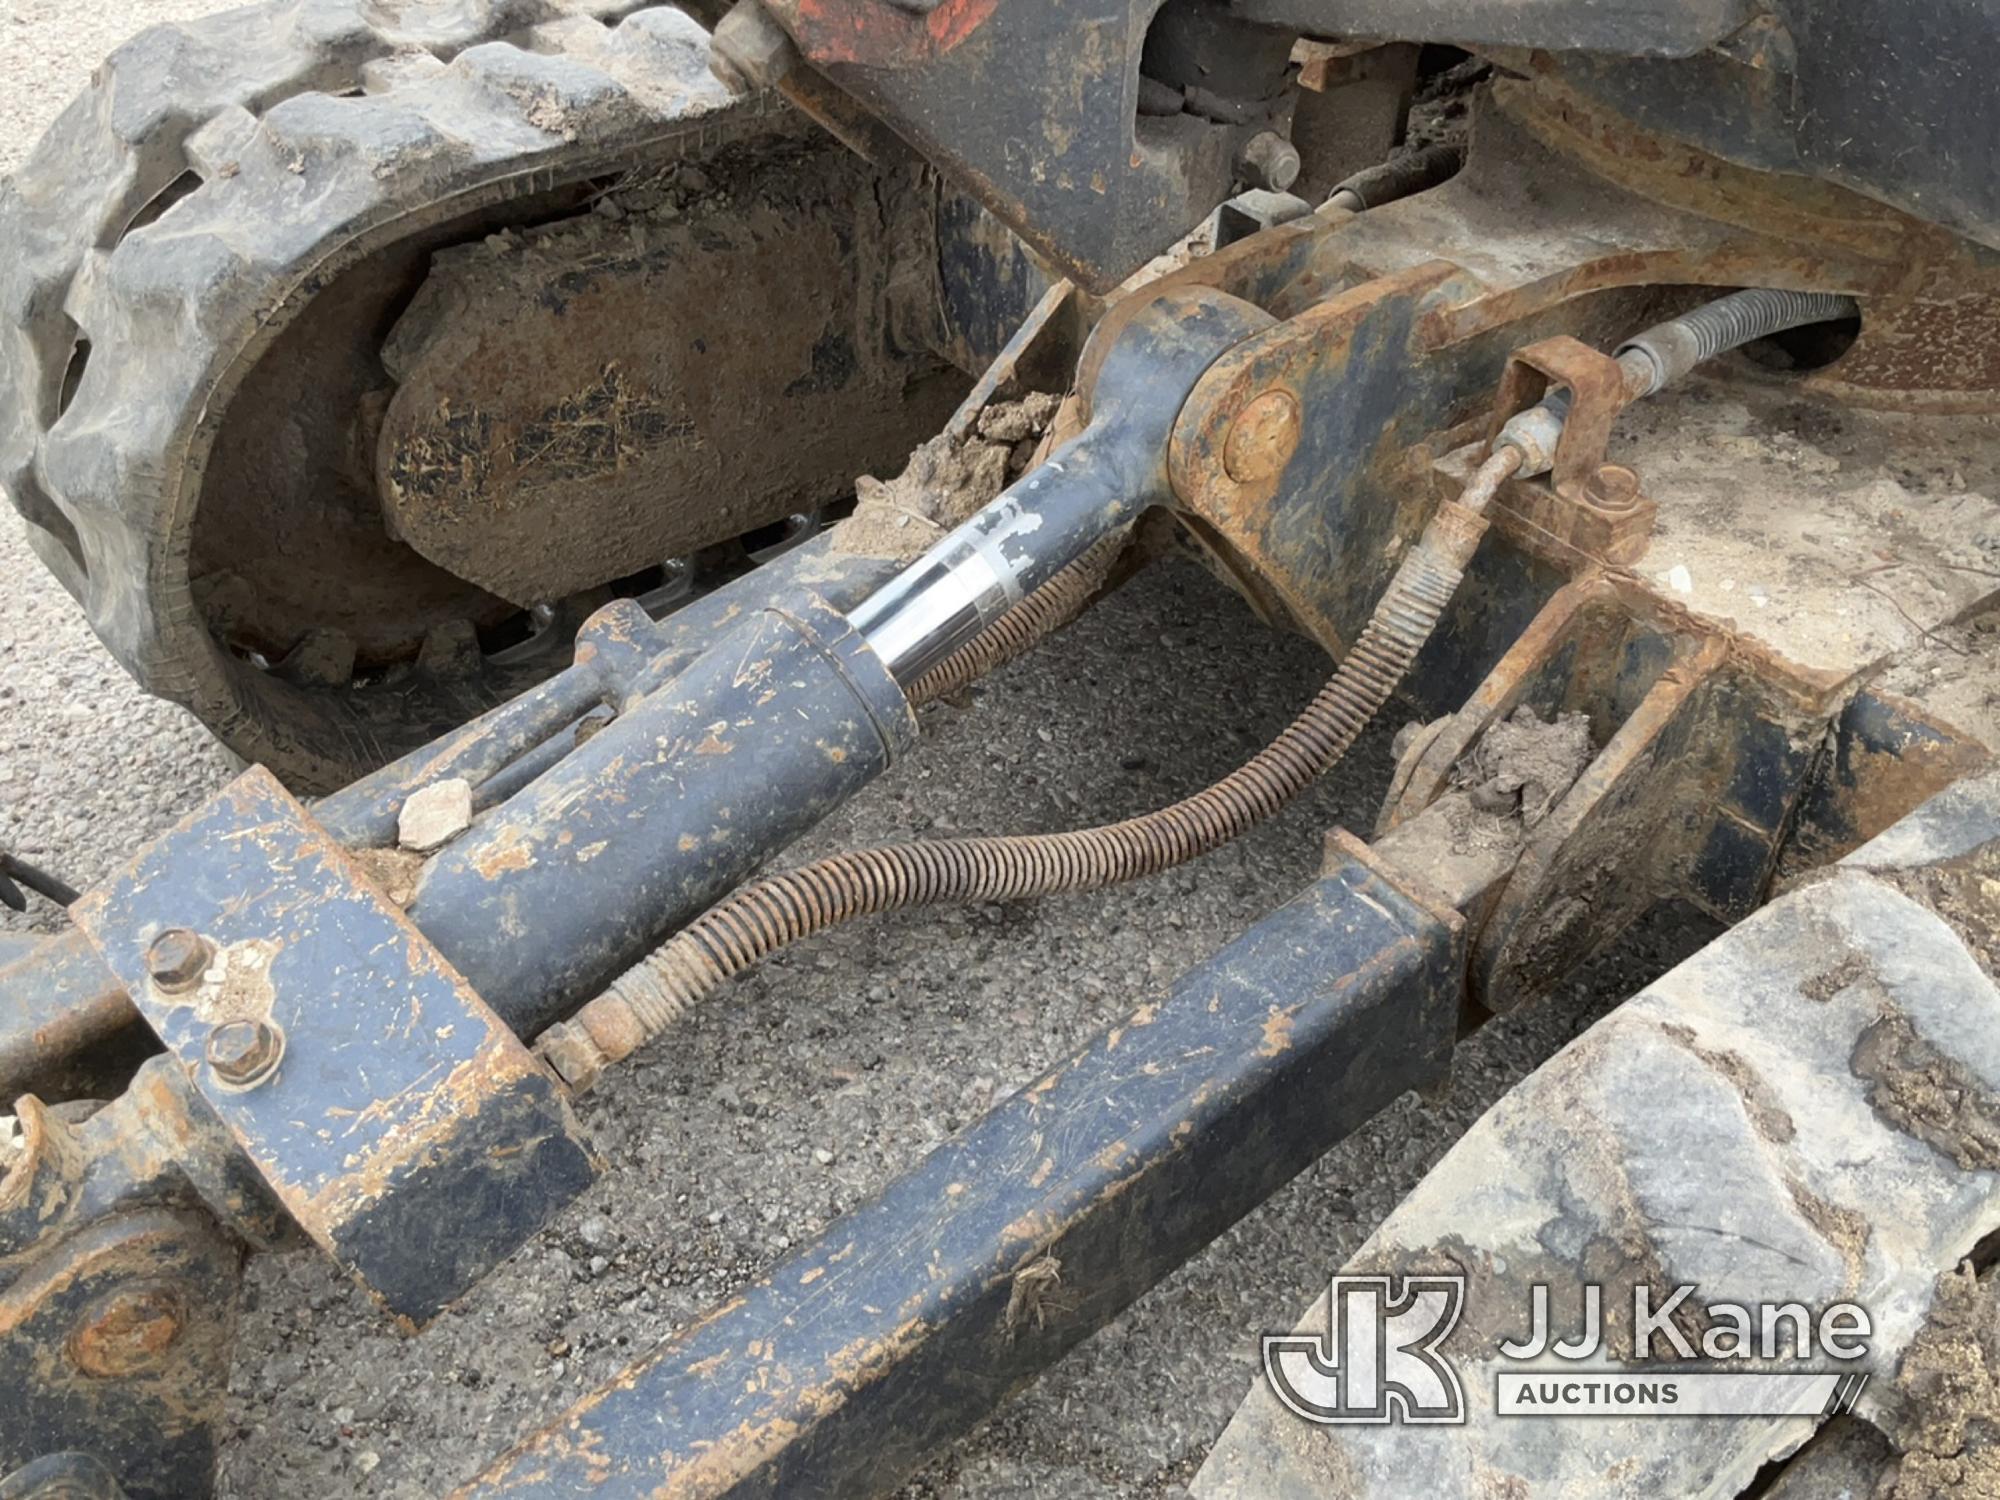 (South Beloit, IL) 2017 Kubota K-008 Mini Hydraulic Excavator Runs, Moves, Operates